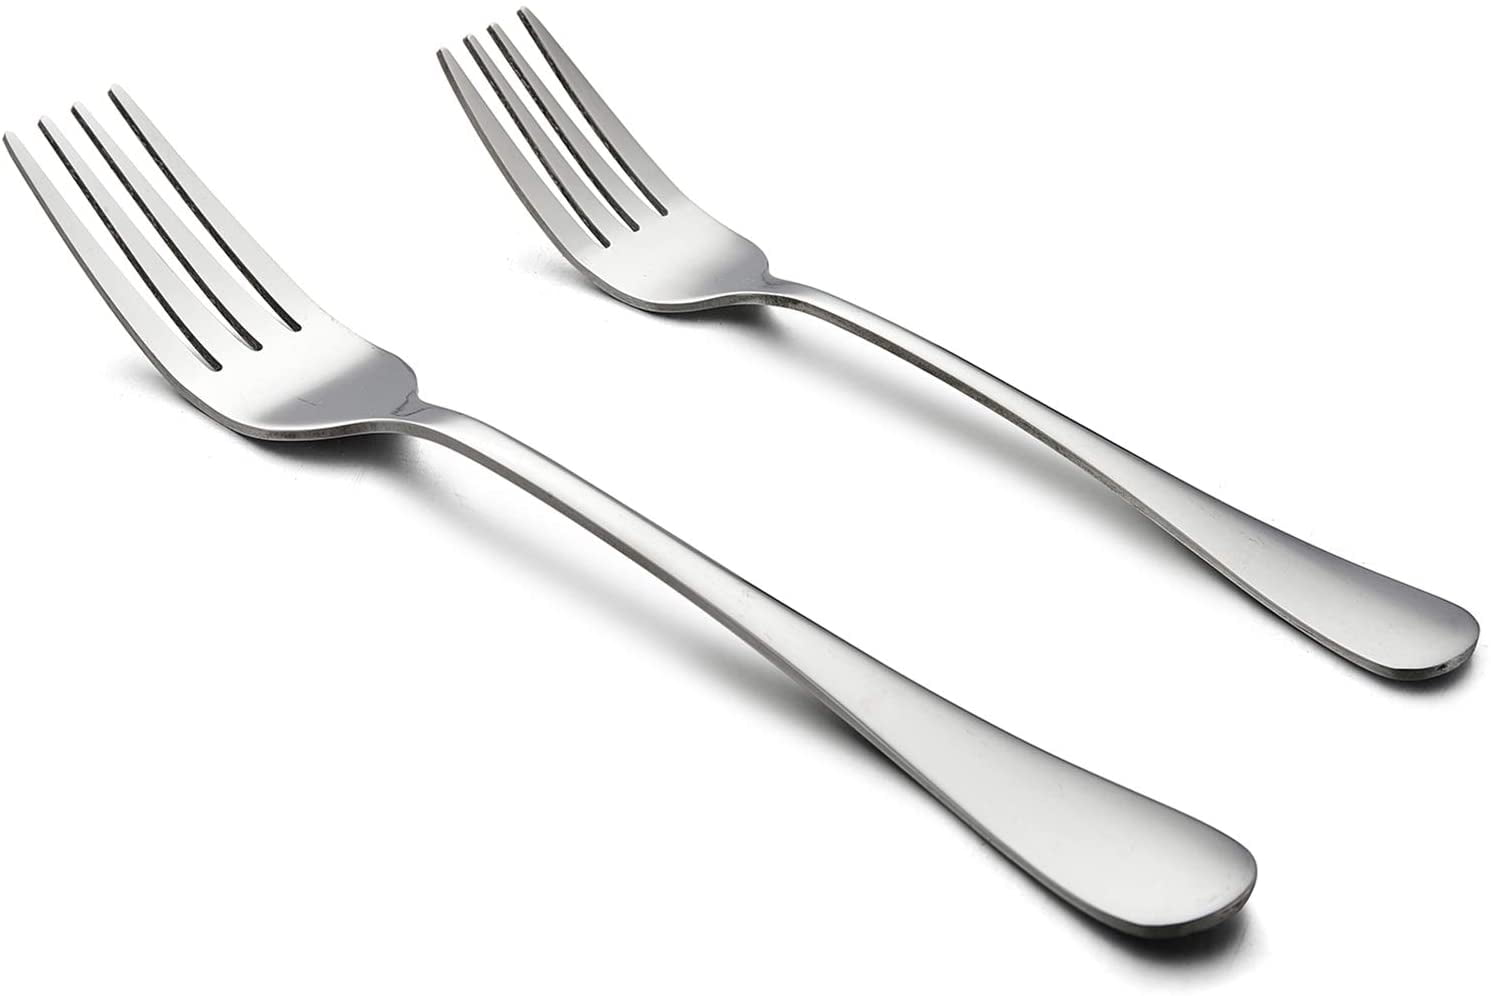 Stainless Steel Utensils Servic Details about   LIANYU 20-Piece Silverware Flatware Cutlery Set 